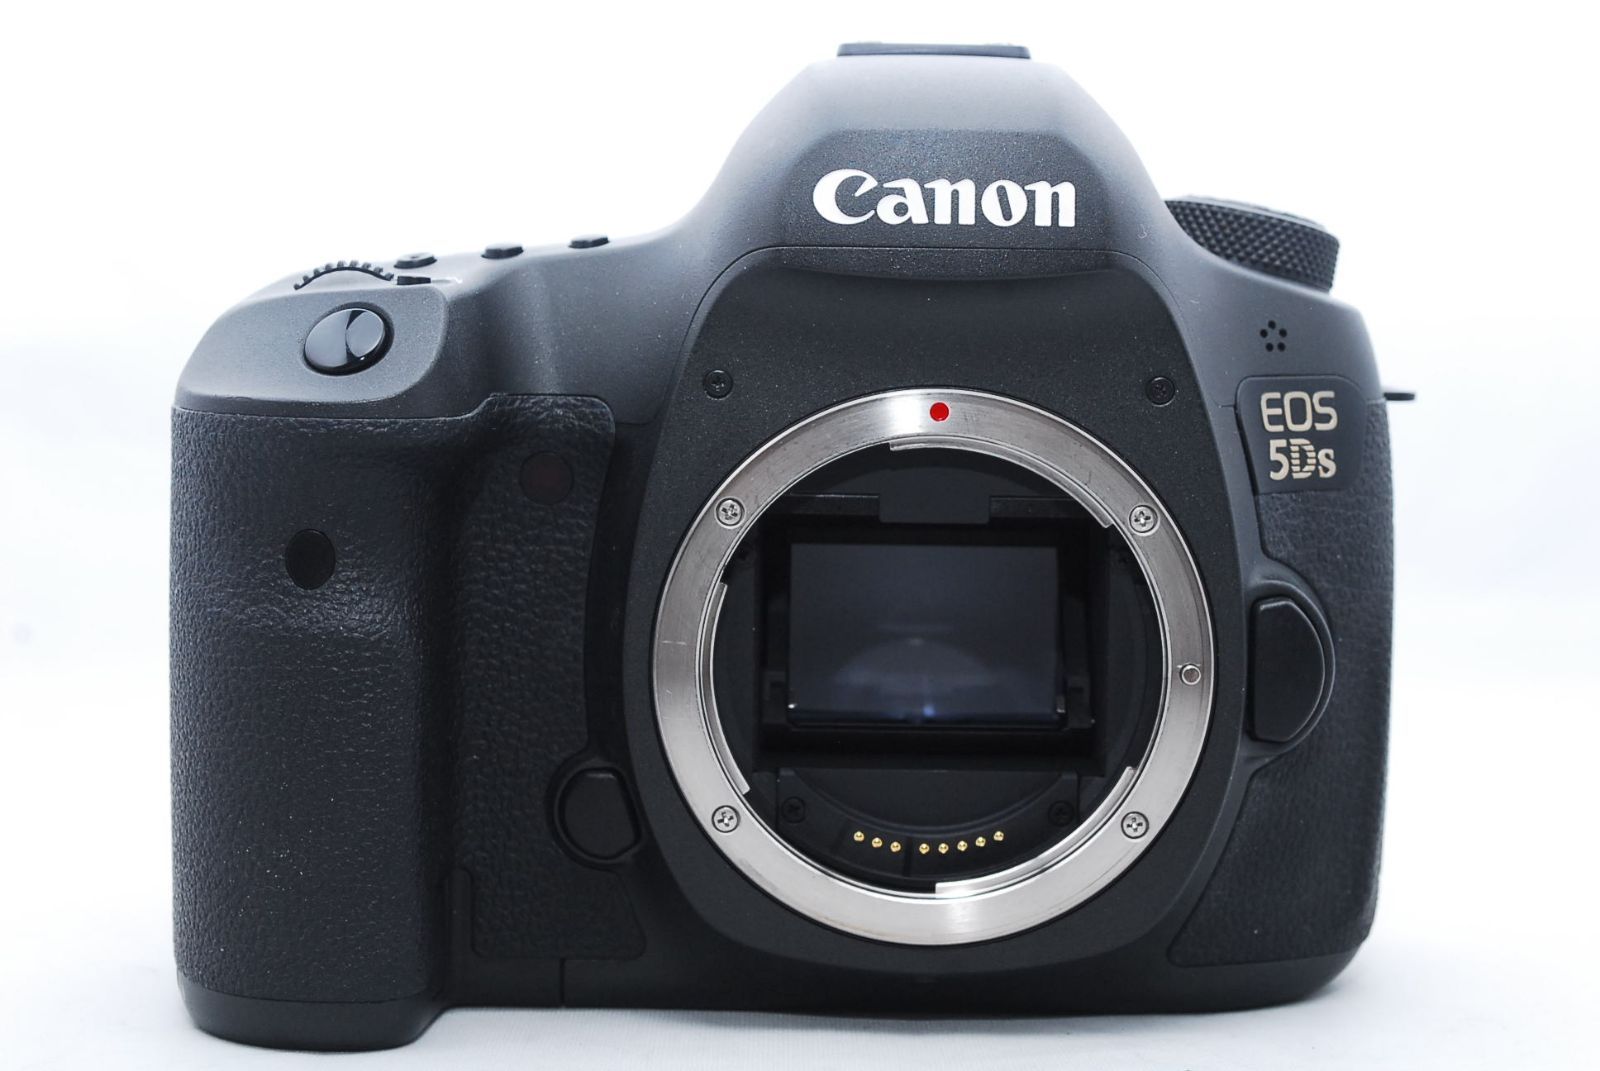 Canon デジタル一眼レフカメラ EOS 5Ds ボディー EOS5DS - 1